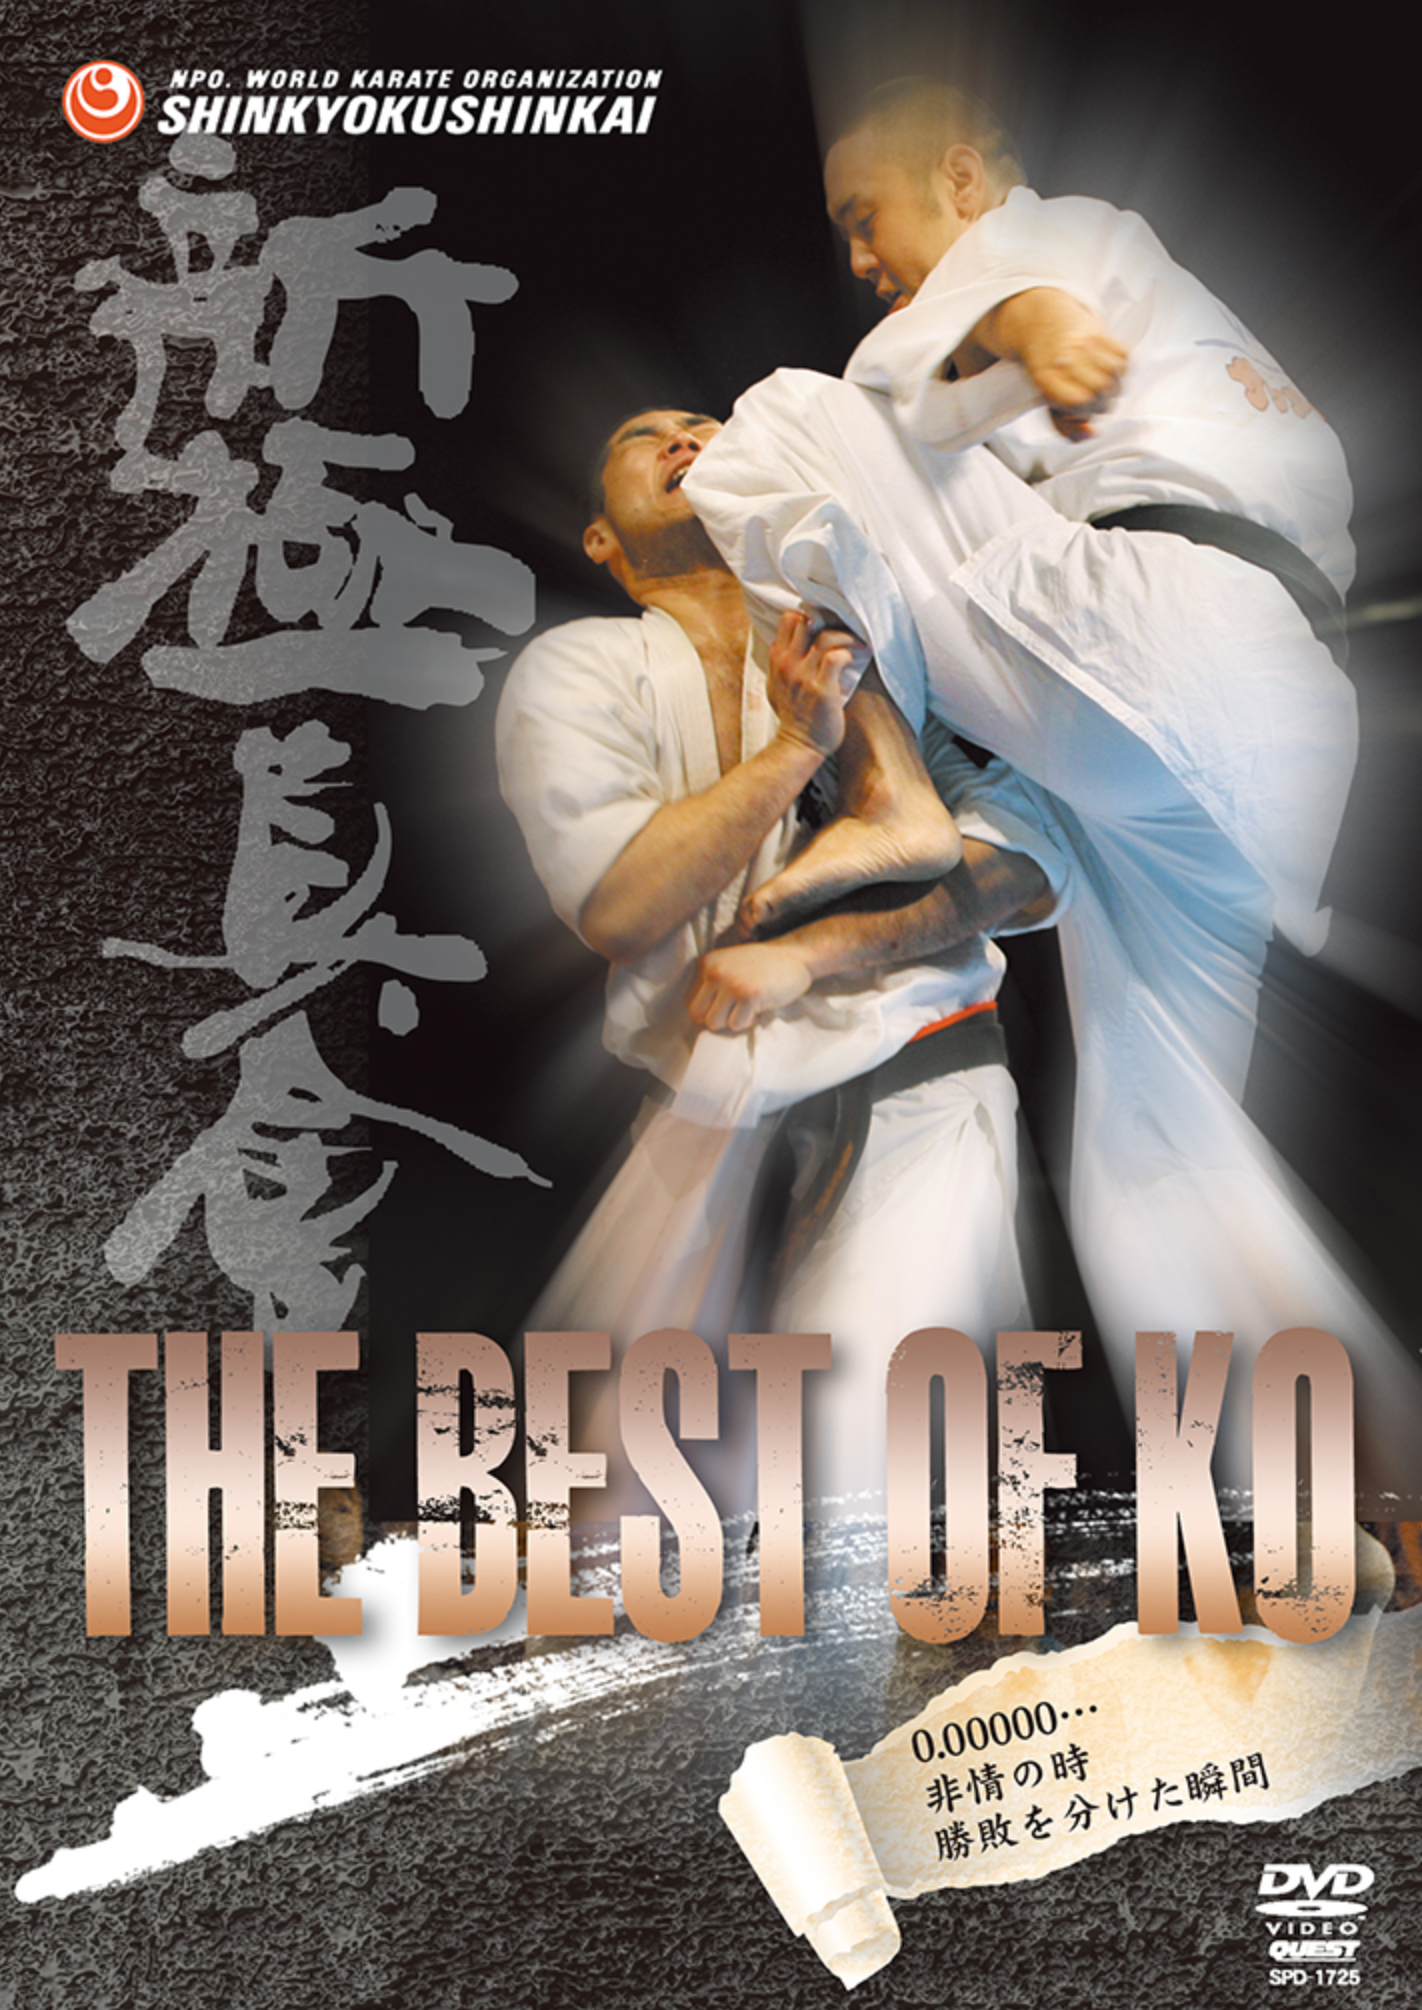 The Best of KO DVD by Shinkyokushinkai Karate - Budovideos Inc